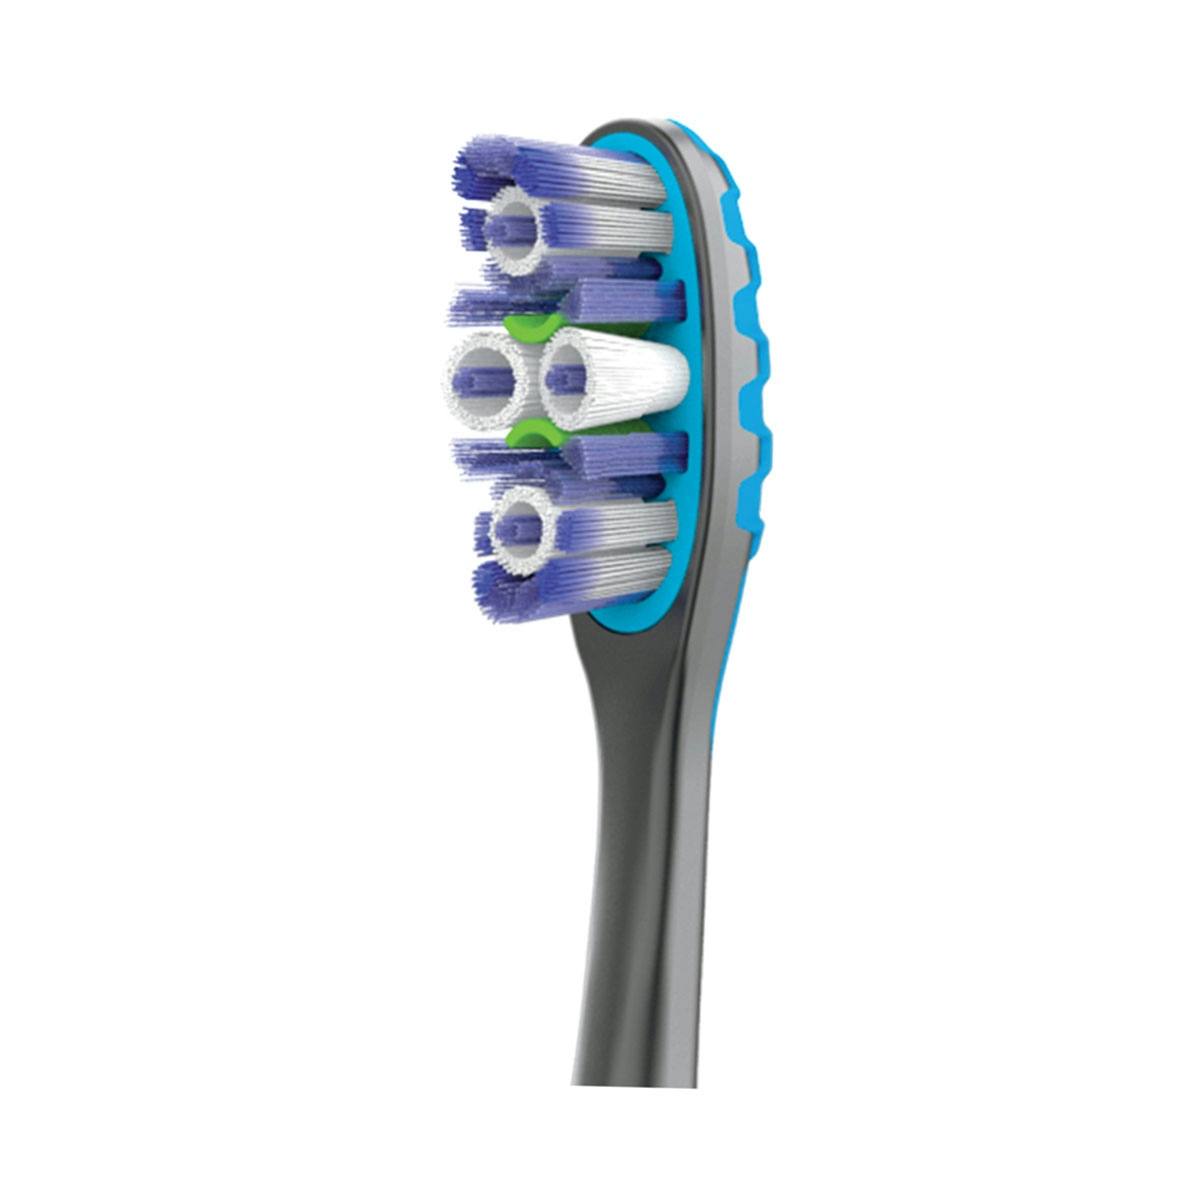 Cepillo de dientes Colgate Colgate 360 Advanced, elimina bacterias bucales, medio